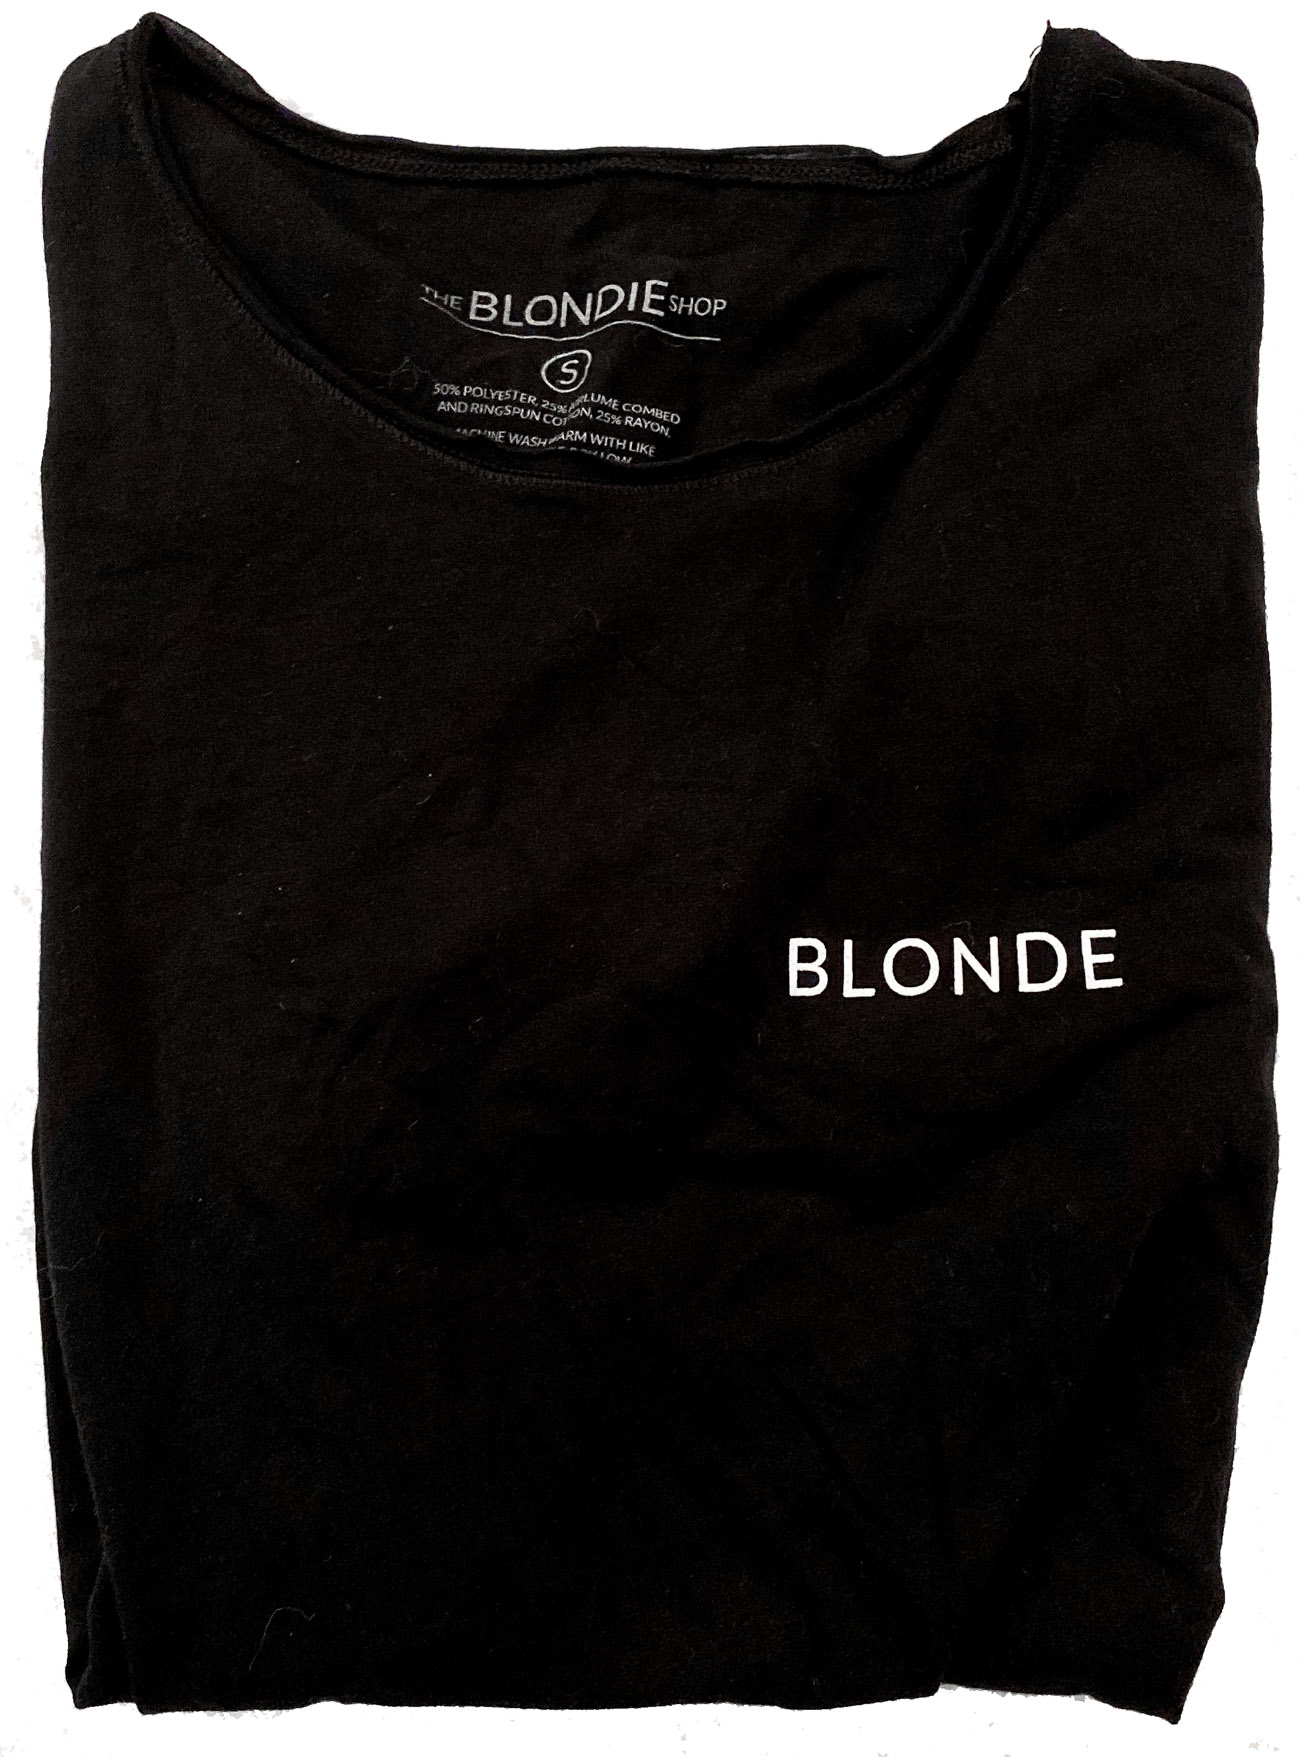 The Blondie Shop | Blonde, Brunette, Redhead | BFF Tee's